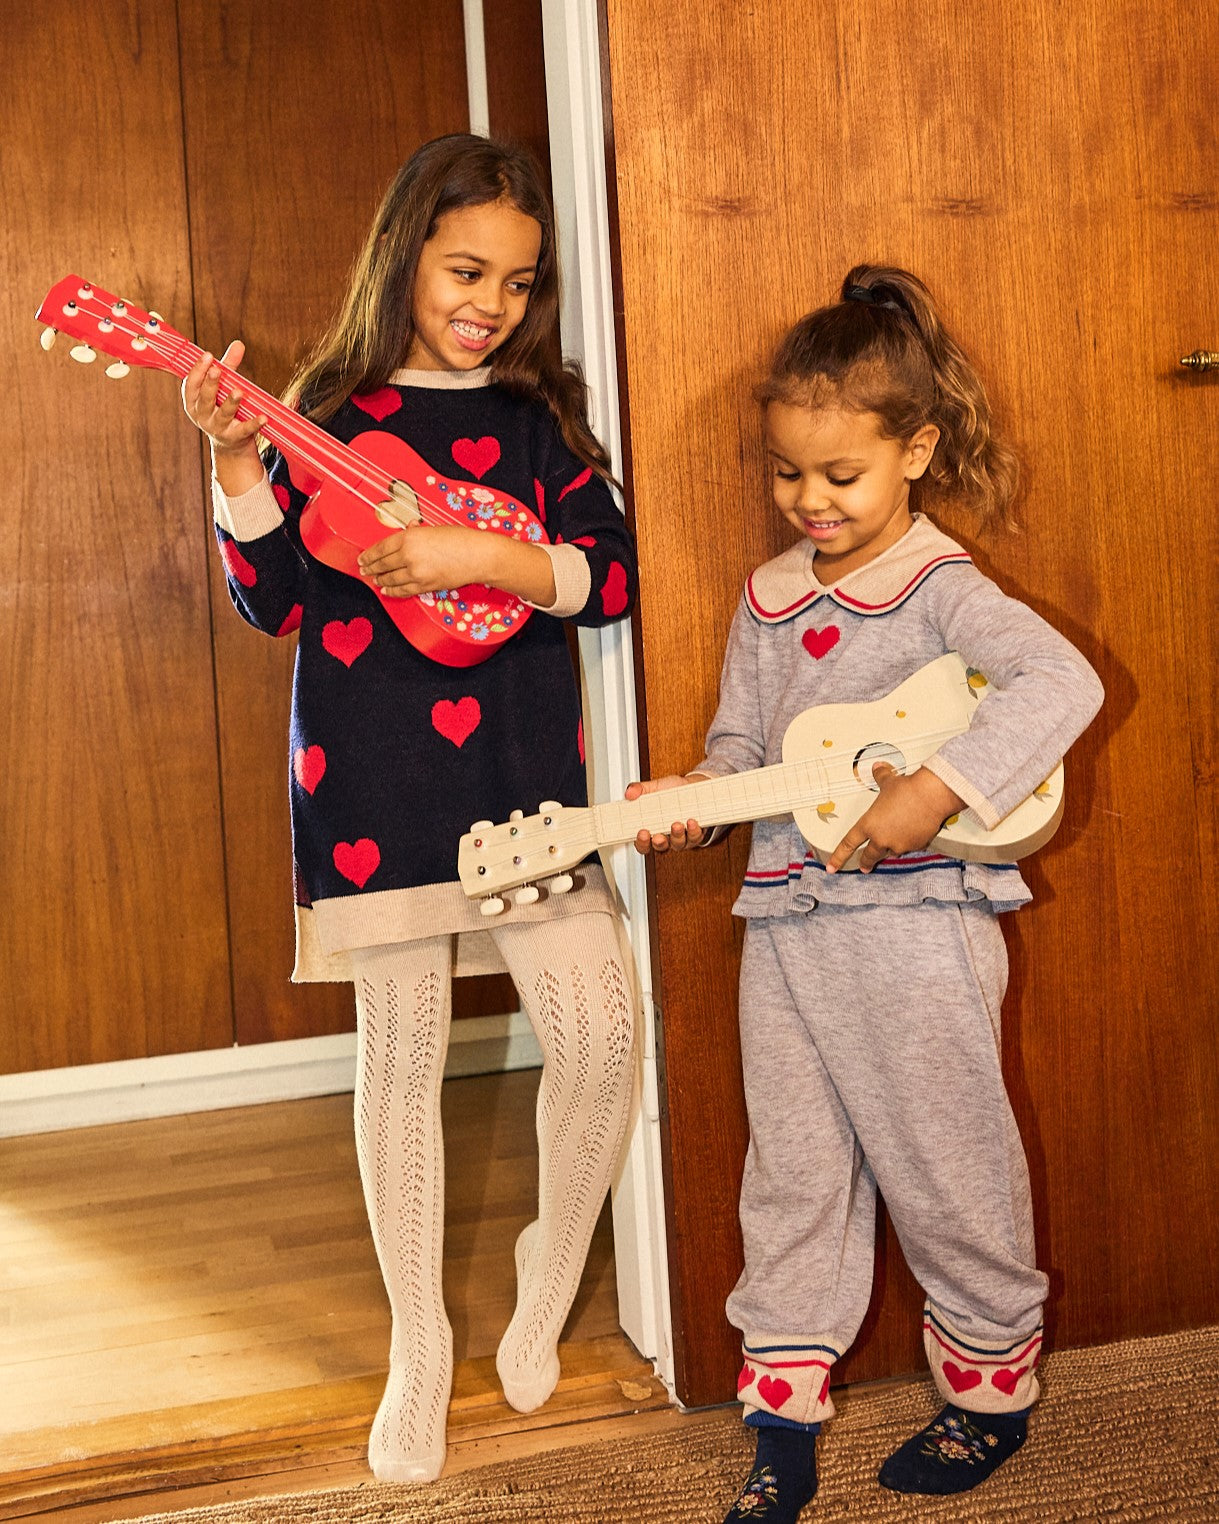 Funny Fruit Ukulele Musical Instrument, Kids Guitar Montessori